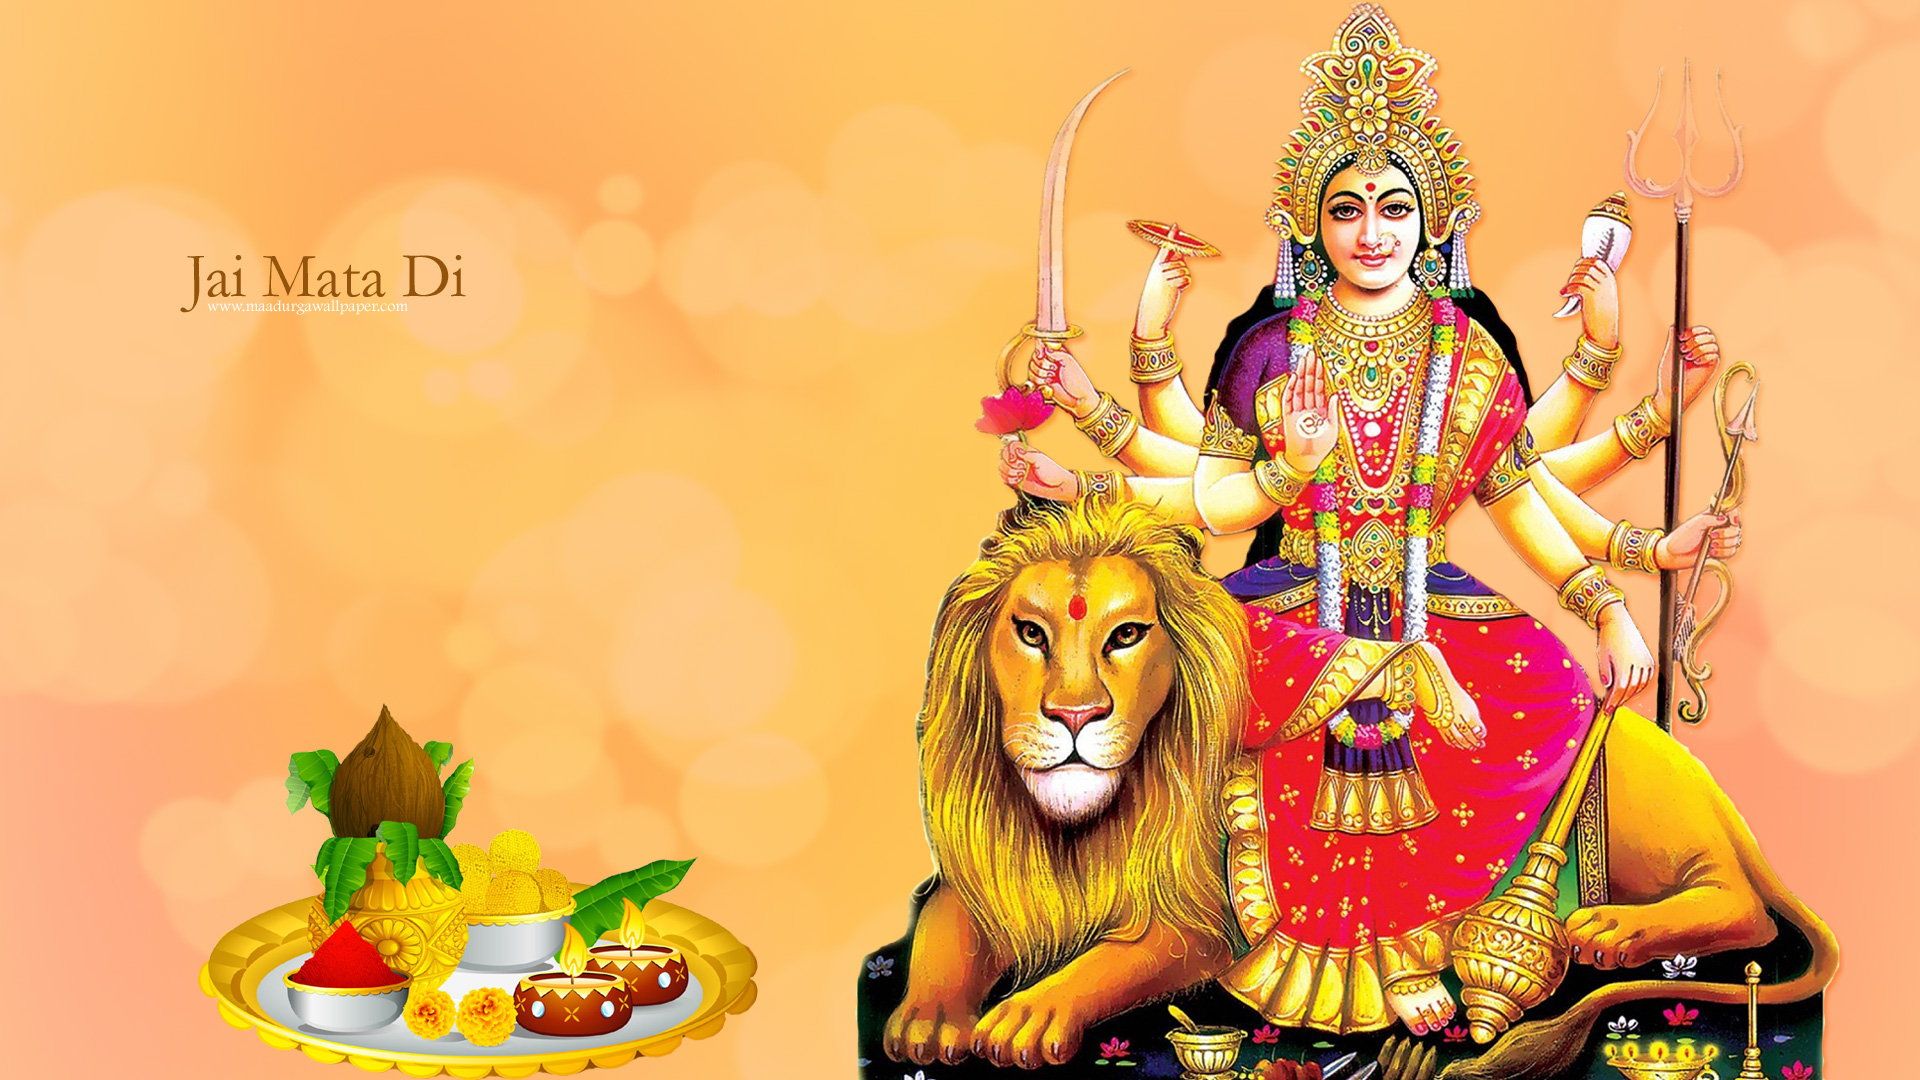 Durga maa image HD wallpaper, full size photo gallery